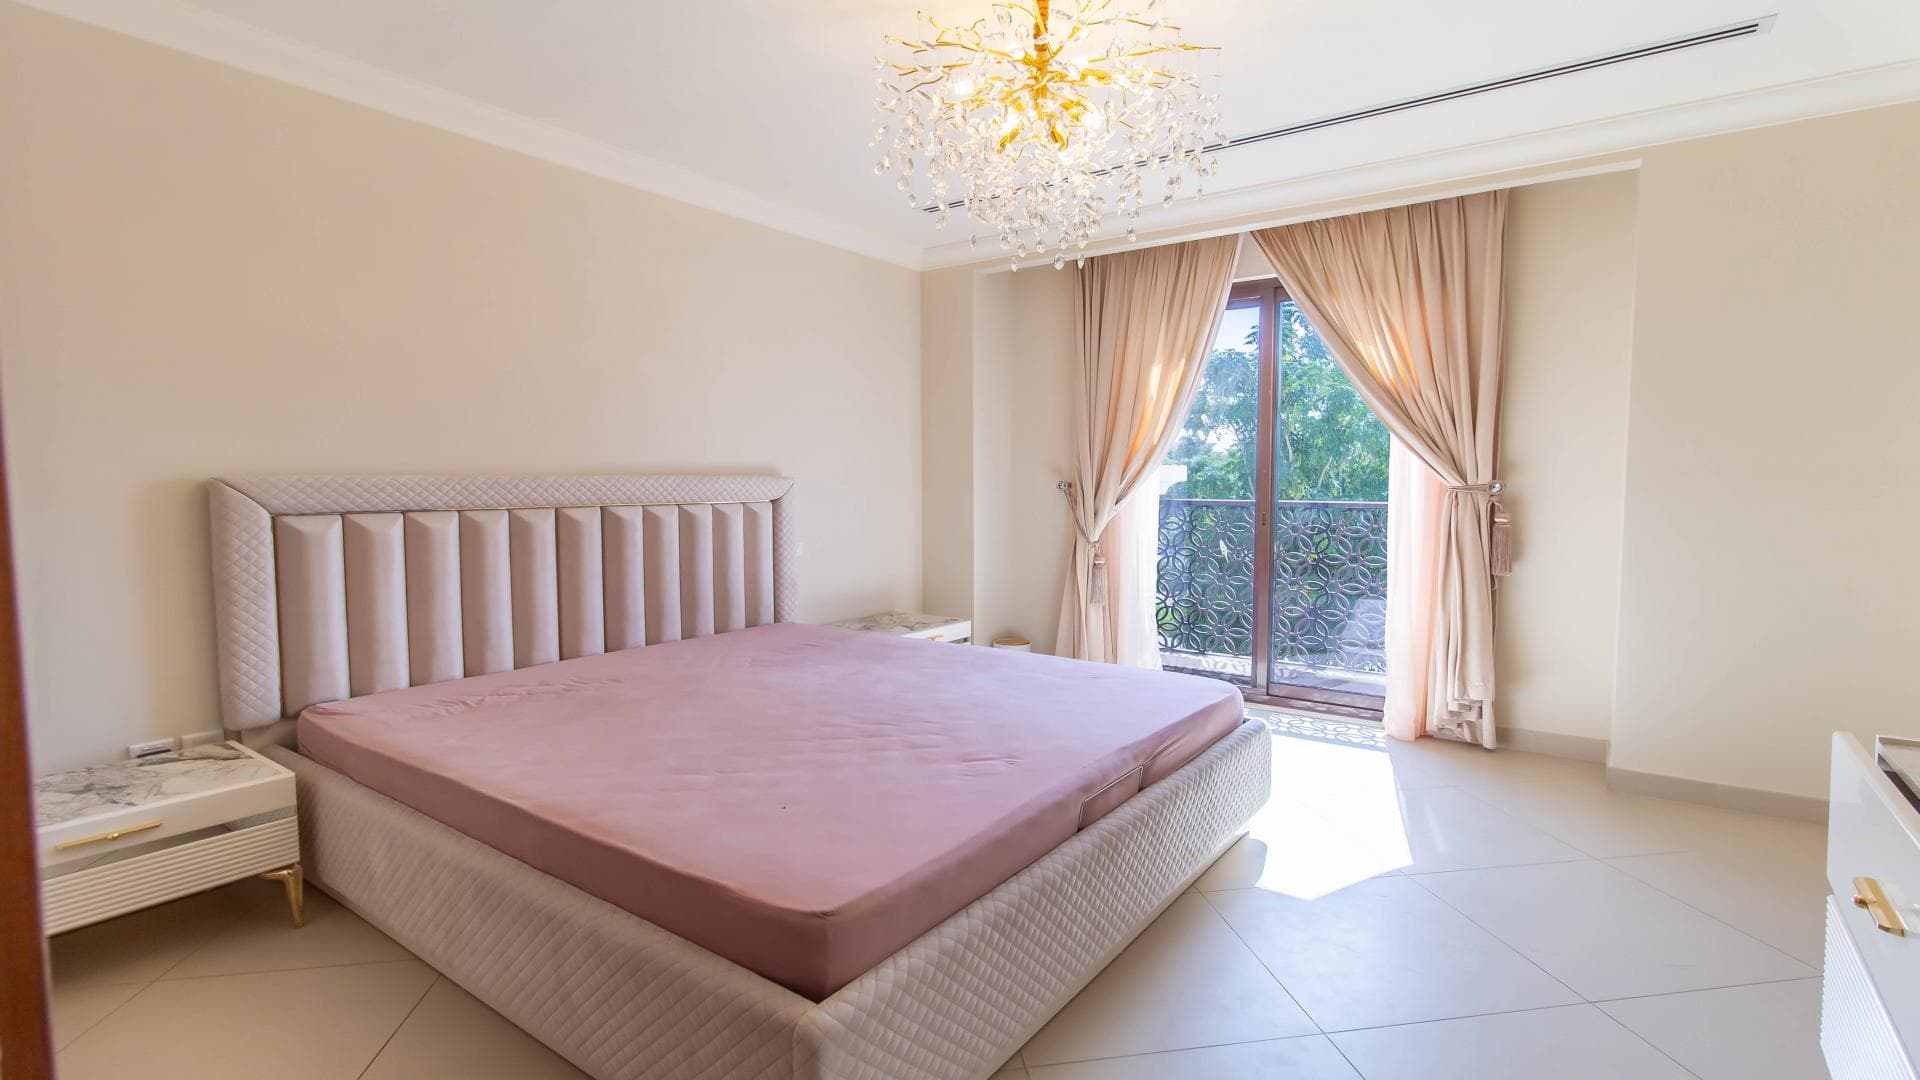 5 Bedroom Villa For Rent Al Bateen Residence Lp27831 2822ae354c69cc00.jpg